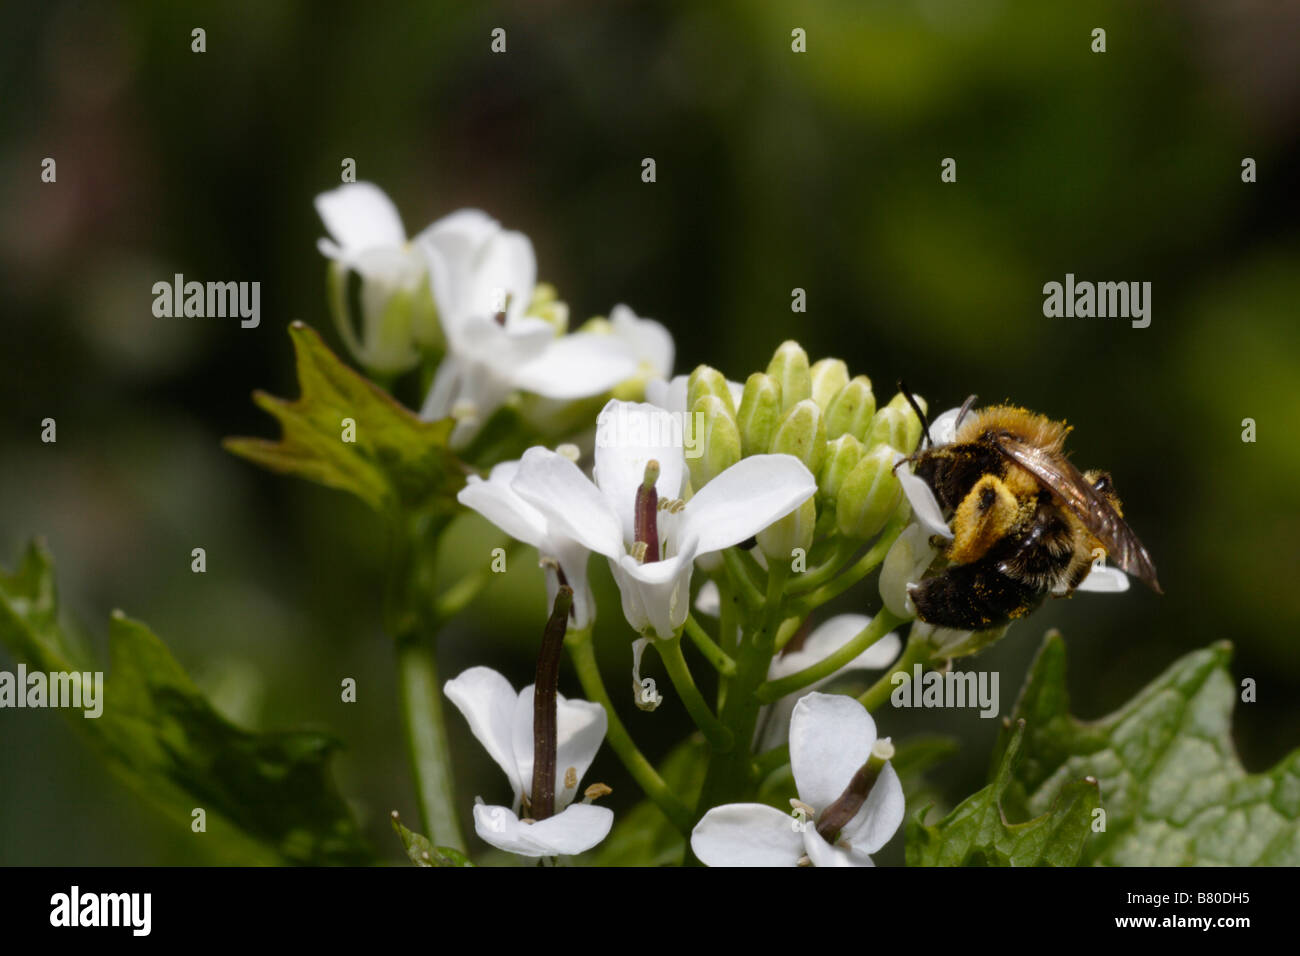 Dasypoda hirtipes, a wild or solitary bee Stock Photo